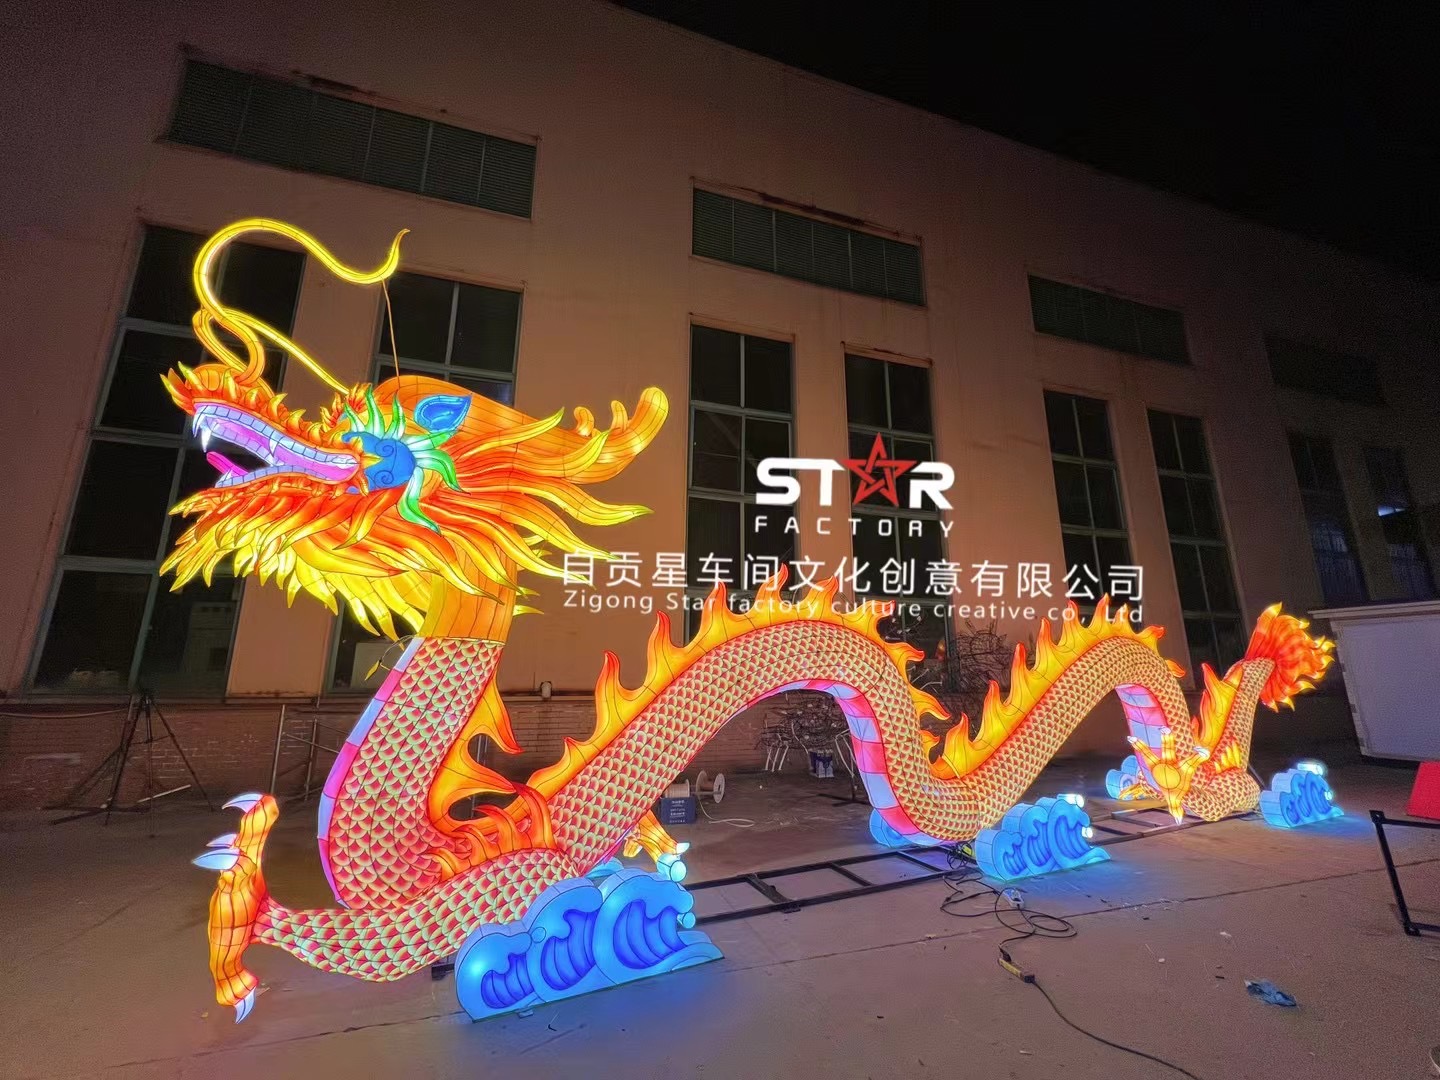 Star Factory Lantern Ltd. Illuminates Malaysia with Grand Lantern Creations